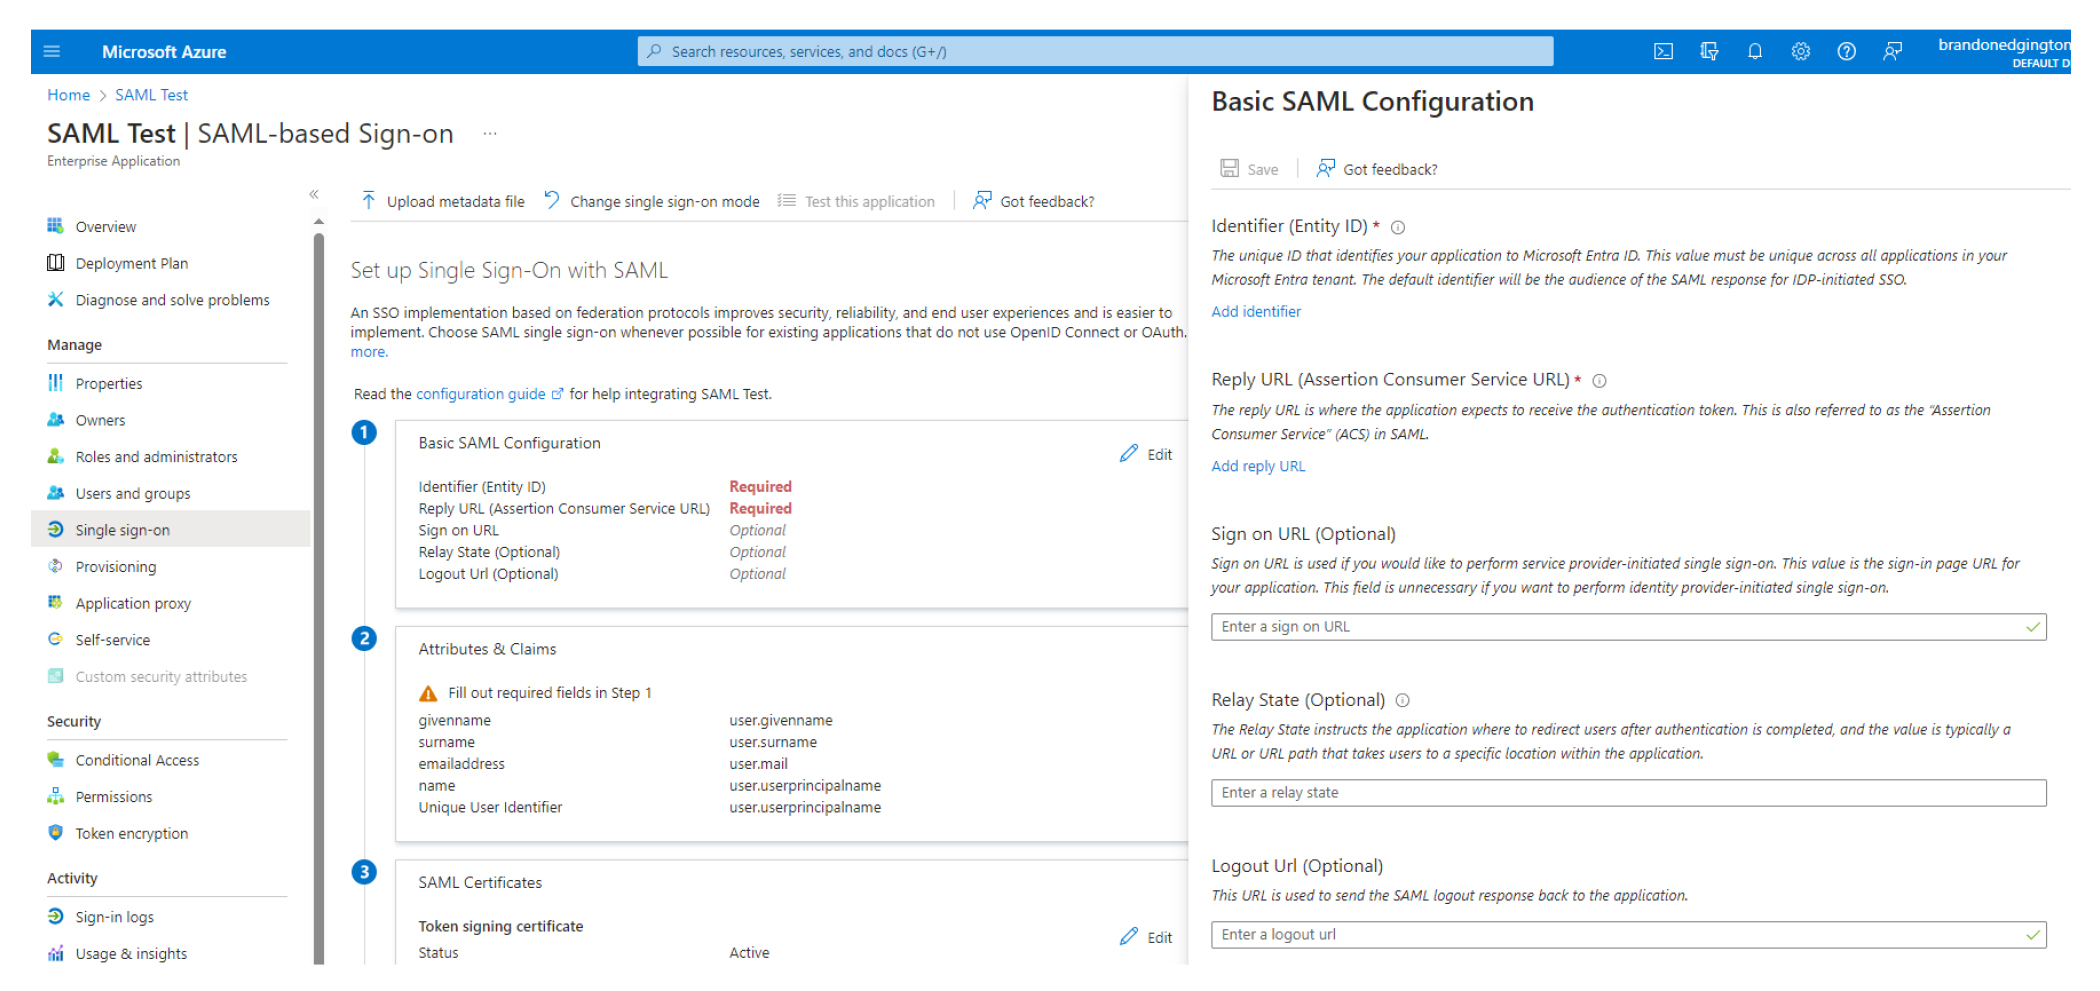 A screenshot showing the Basic SAML configuration window.